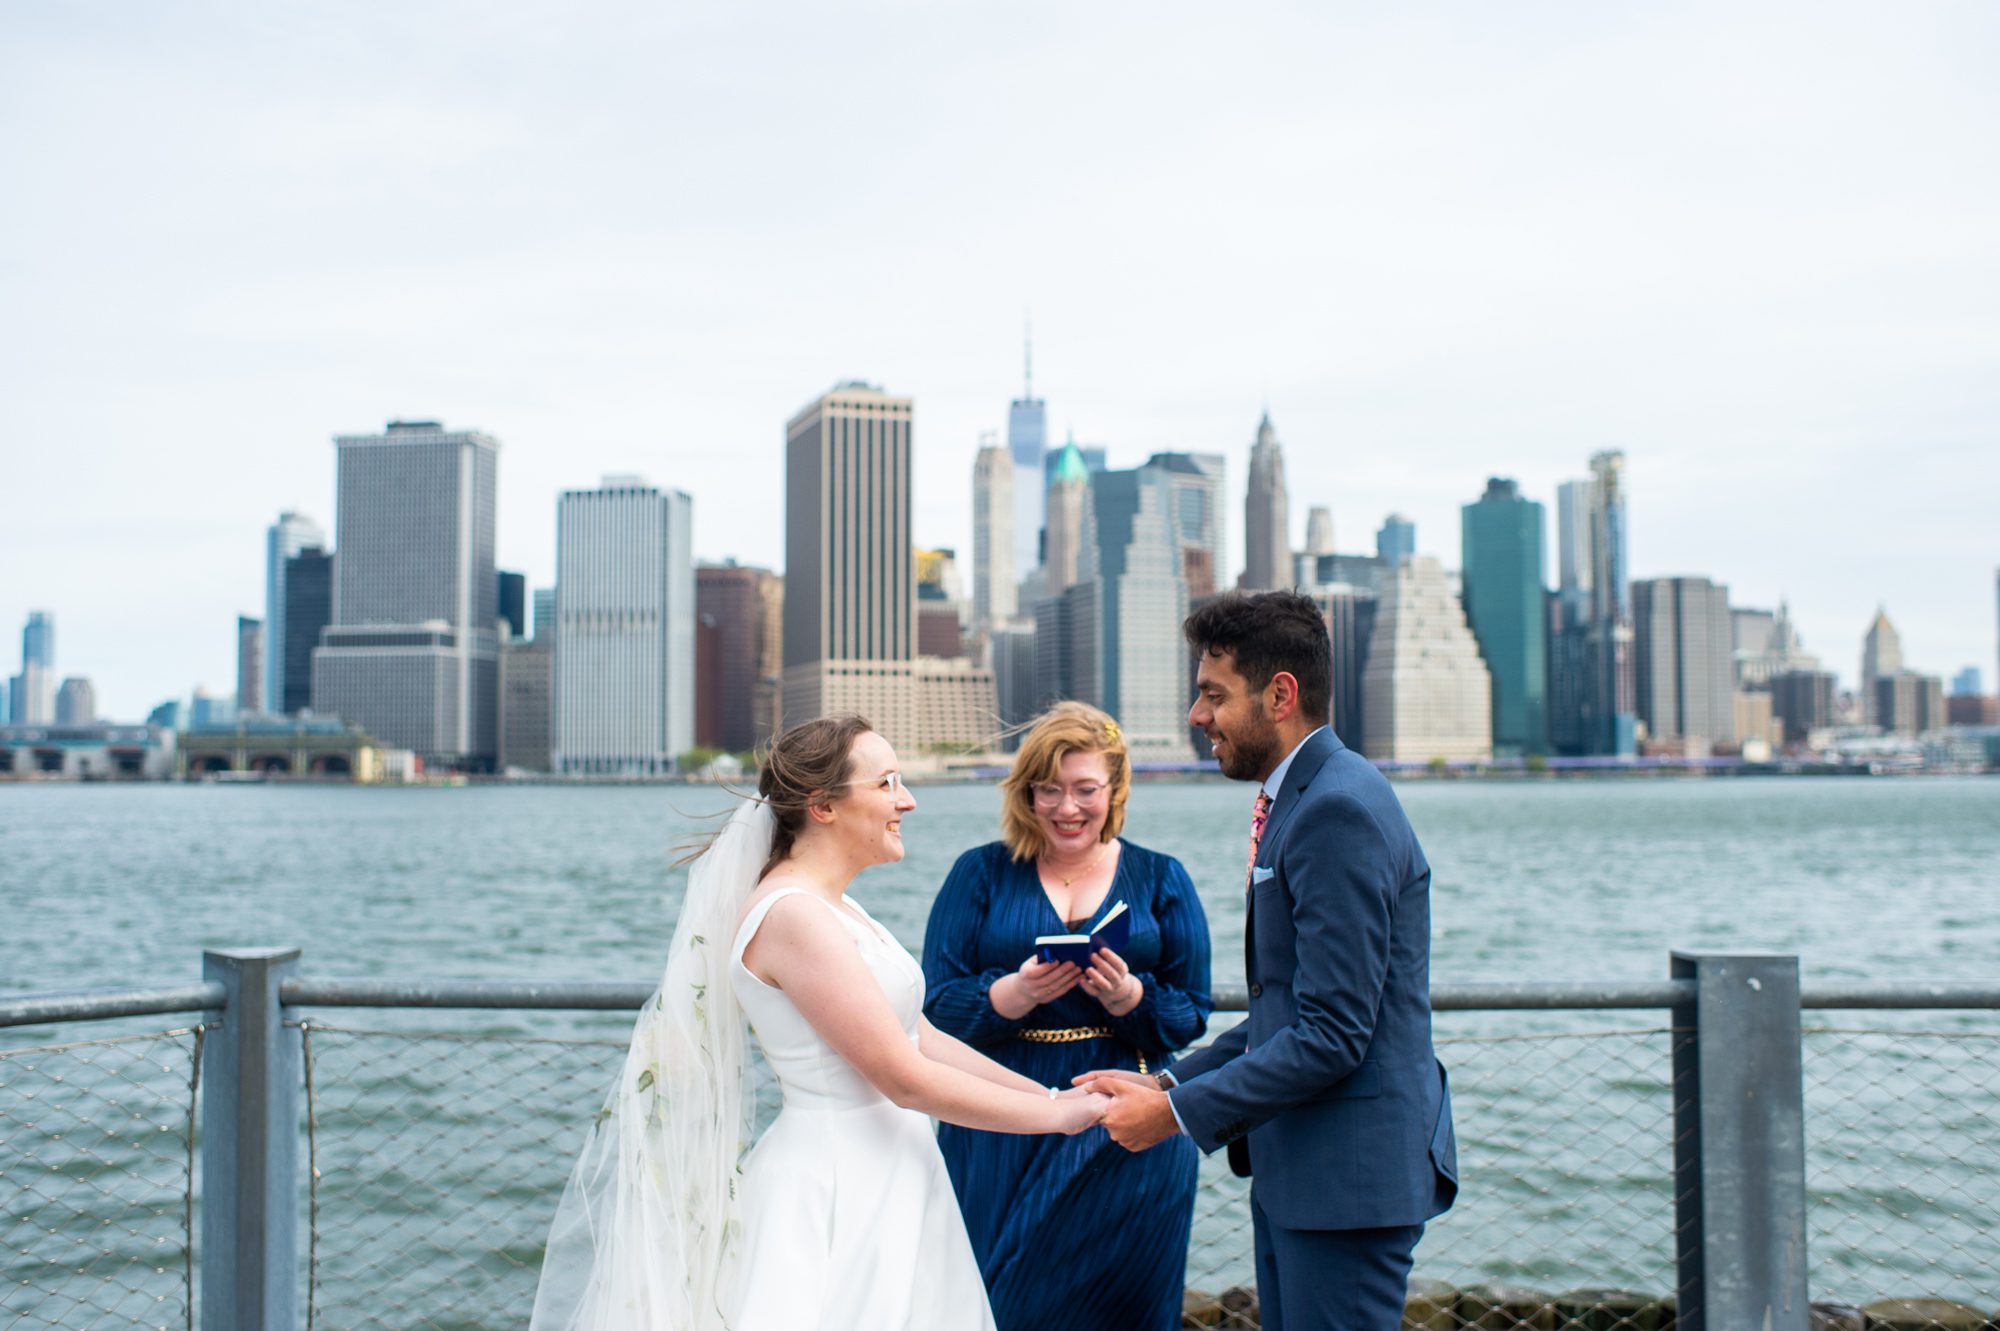 Brooklyn Bridge Park Pier 6 Wedding Ceremony